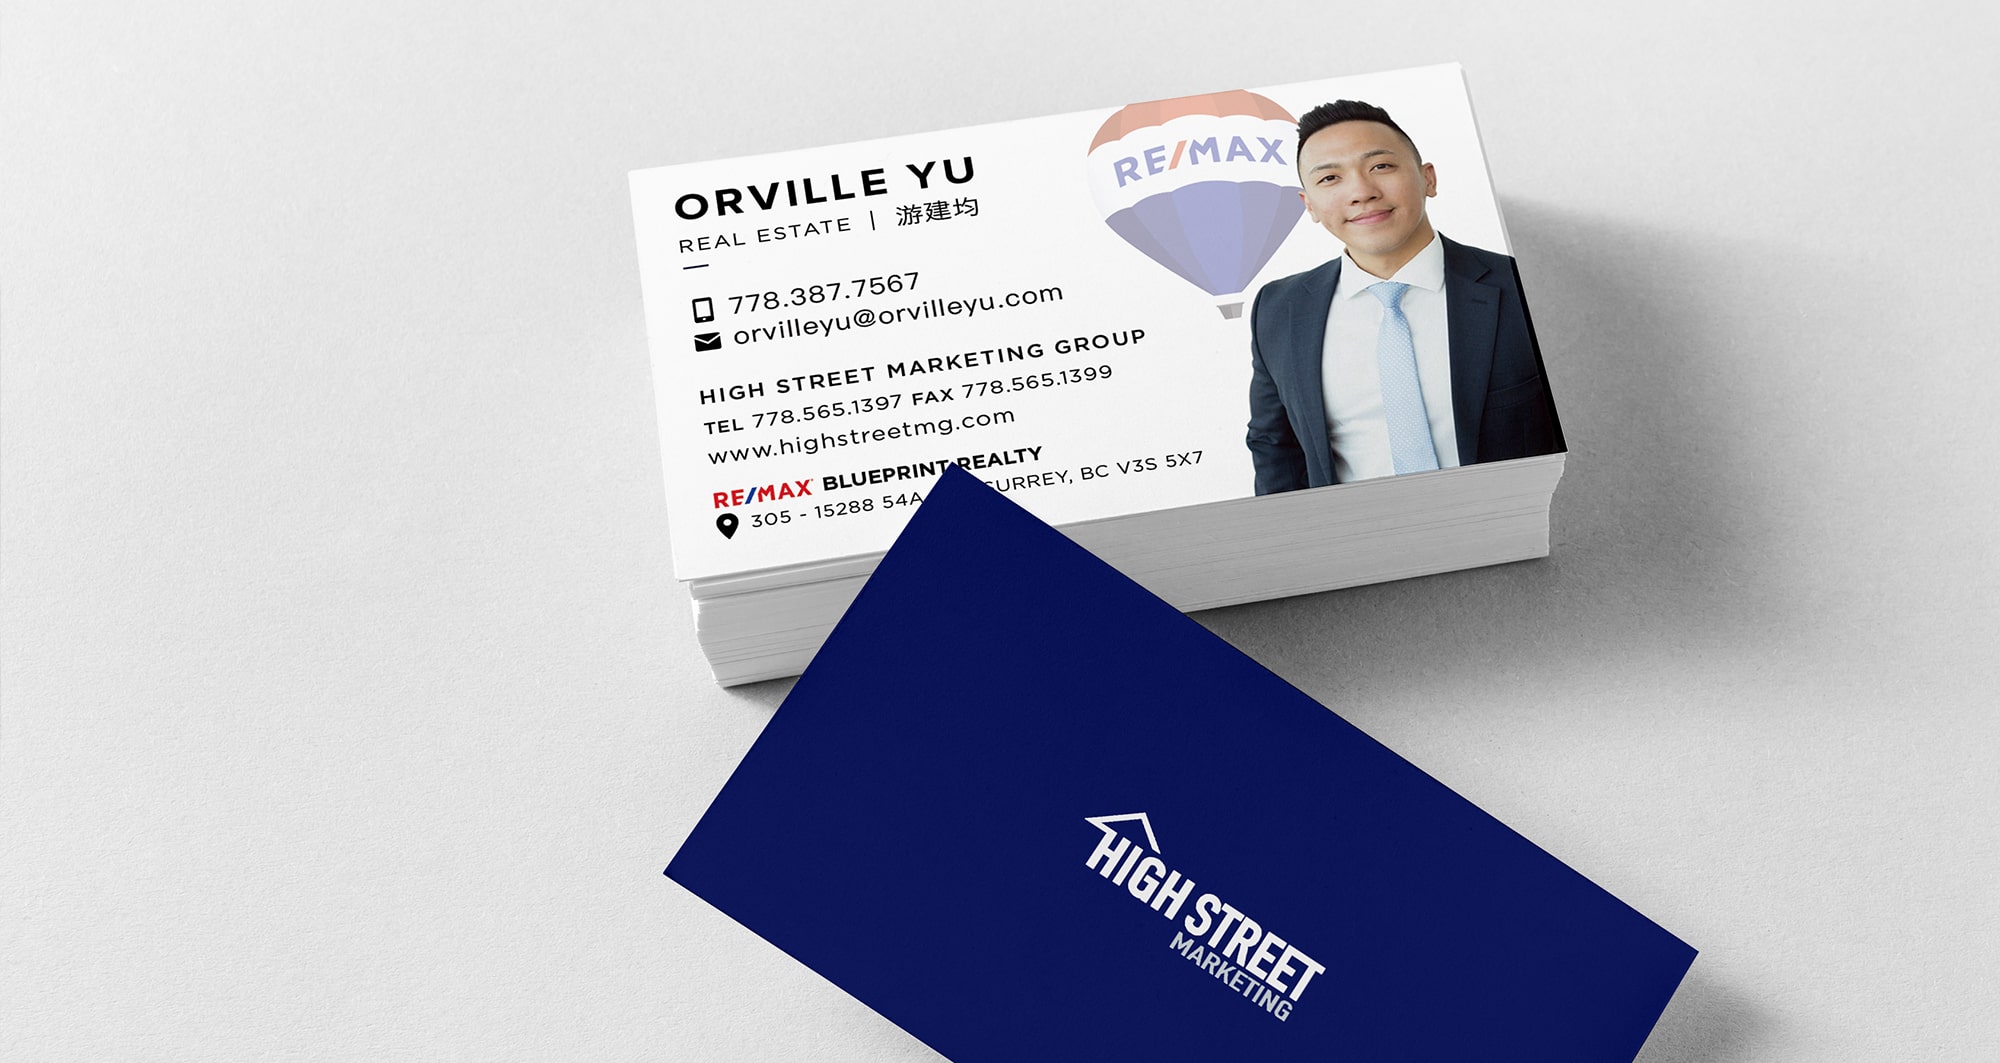 orville yu vancouver realtor business card design